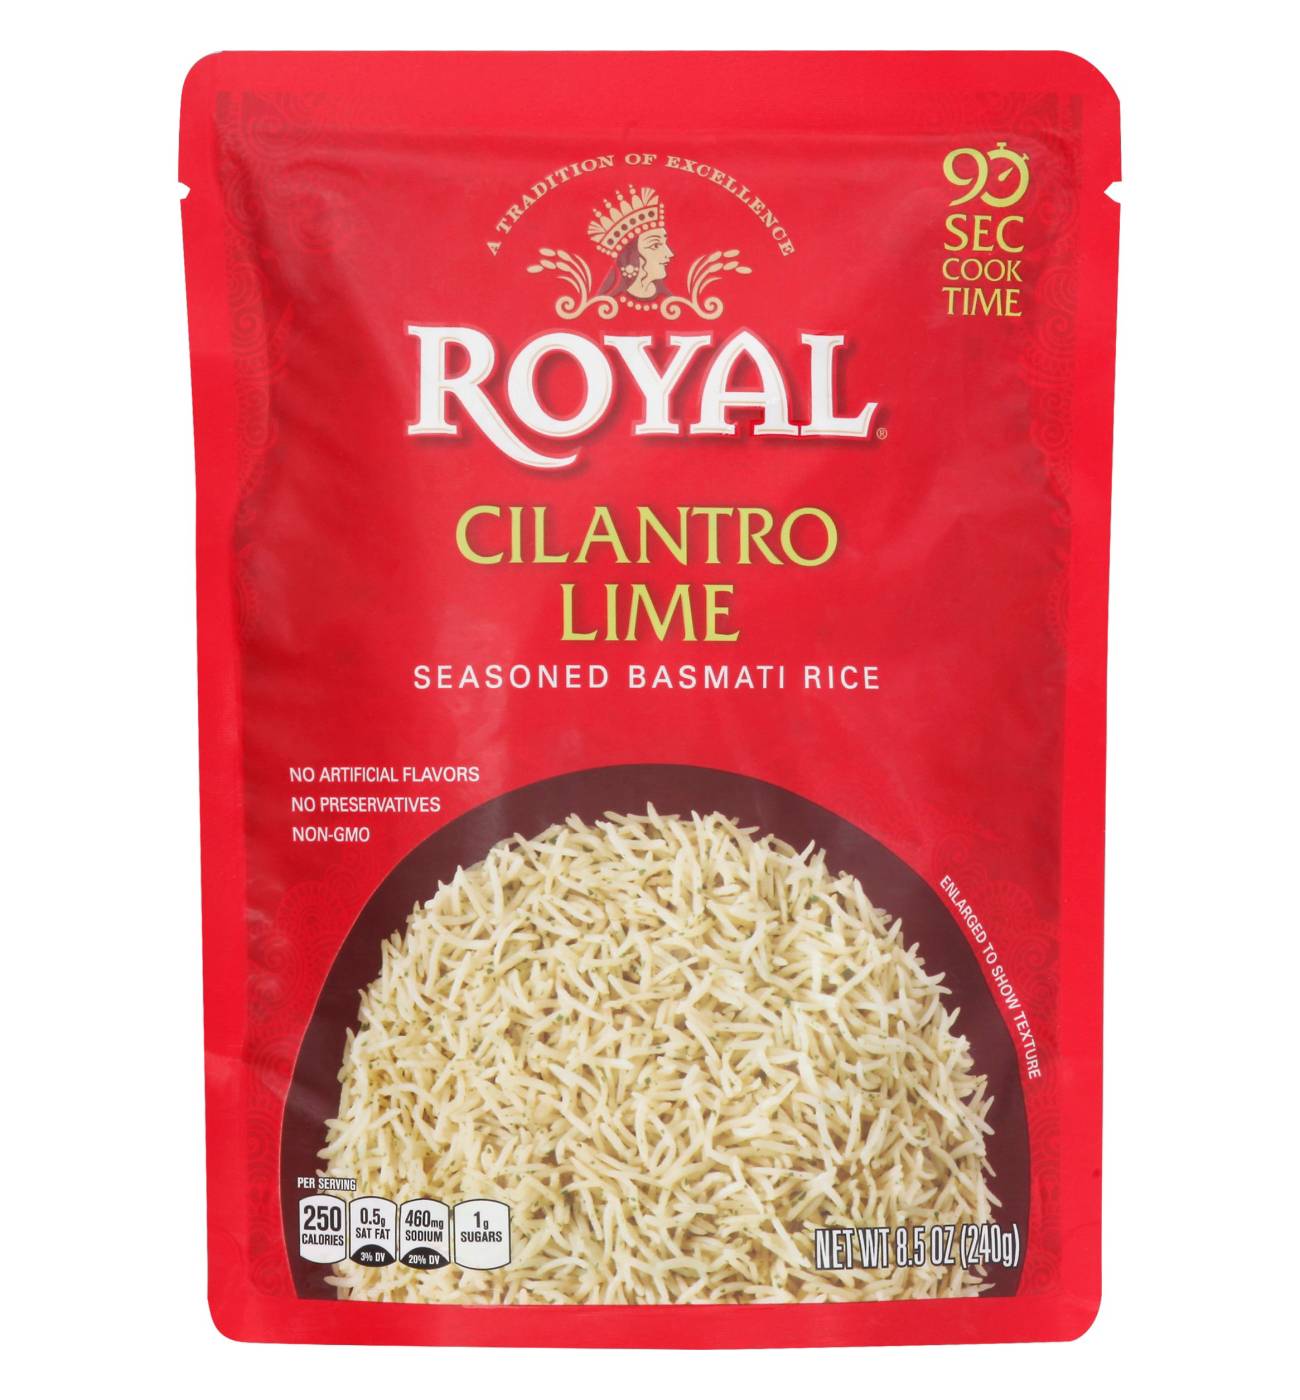 Royal Cilantro Lime Seasoned Basmati Rice